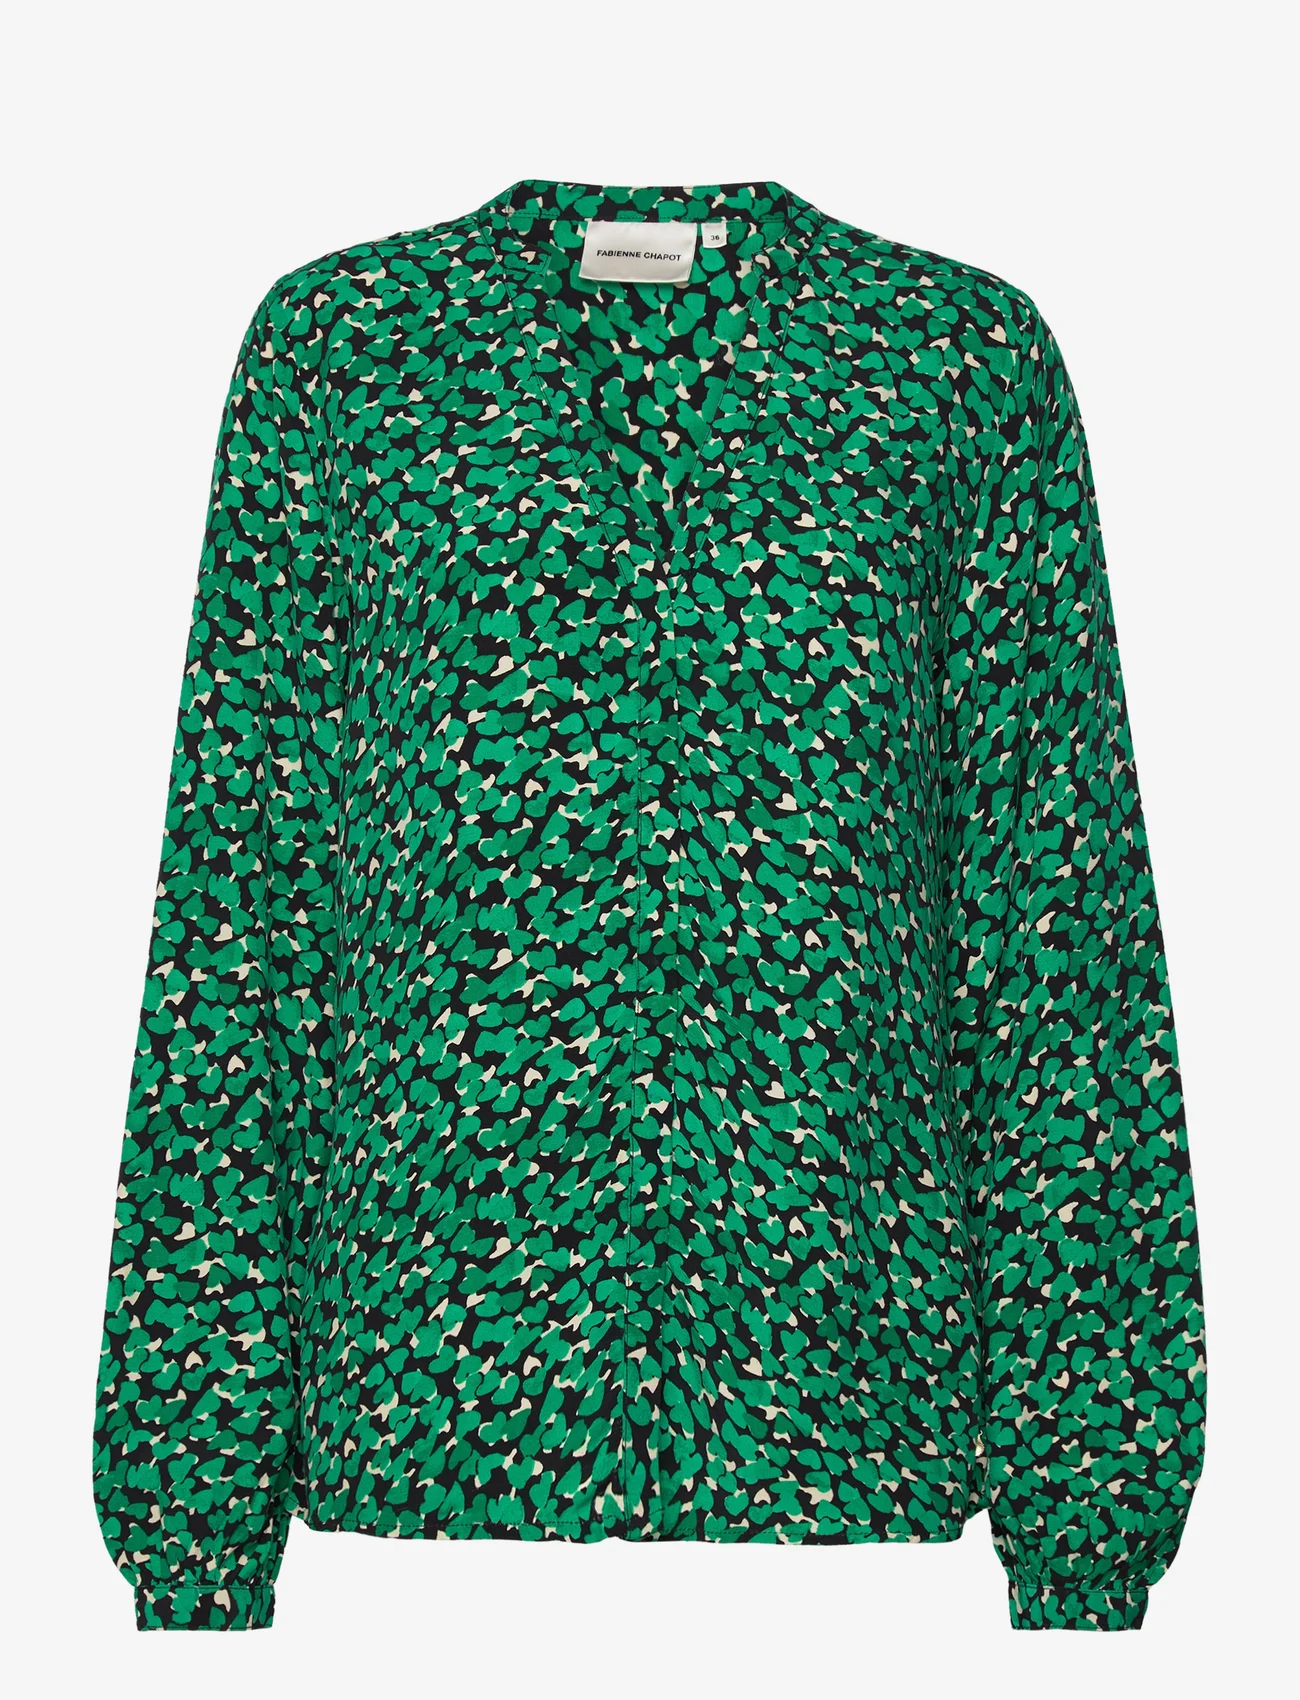 Fabienne Chapot - Frida Blouse - bluzki z długimi rękawami - feeling green/black - 0